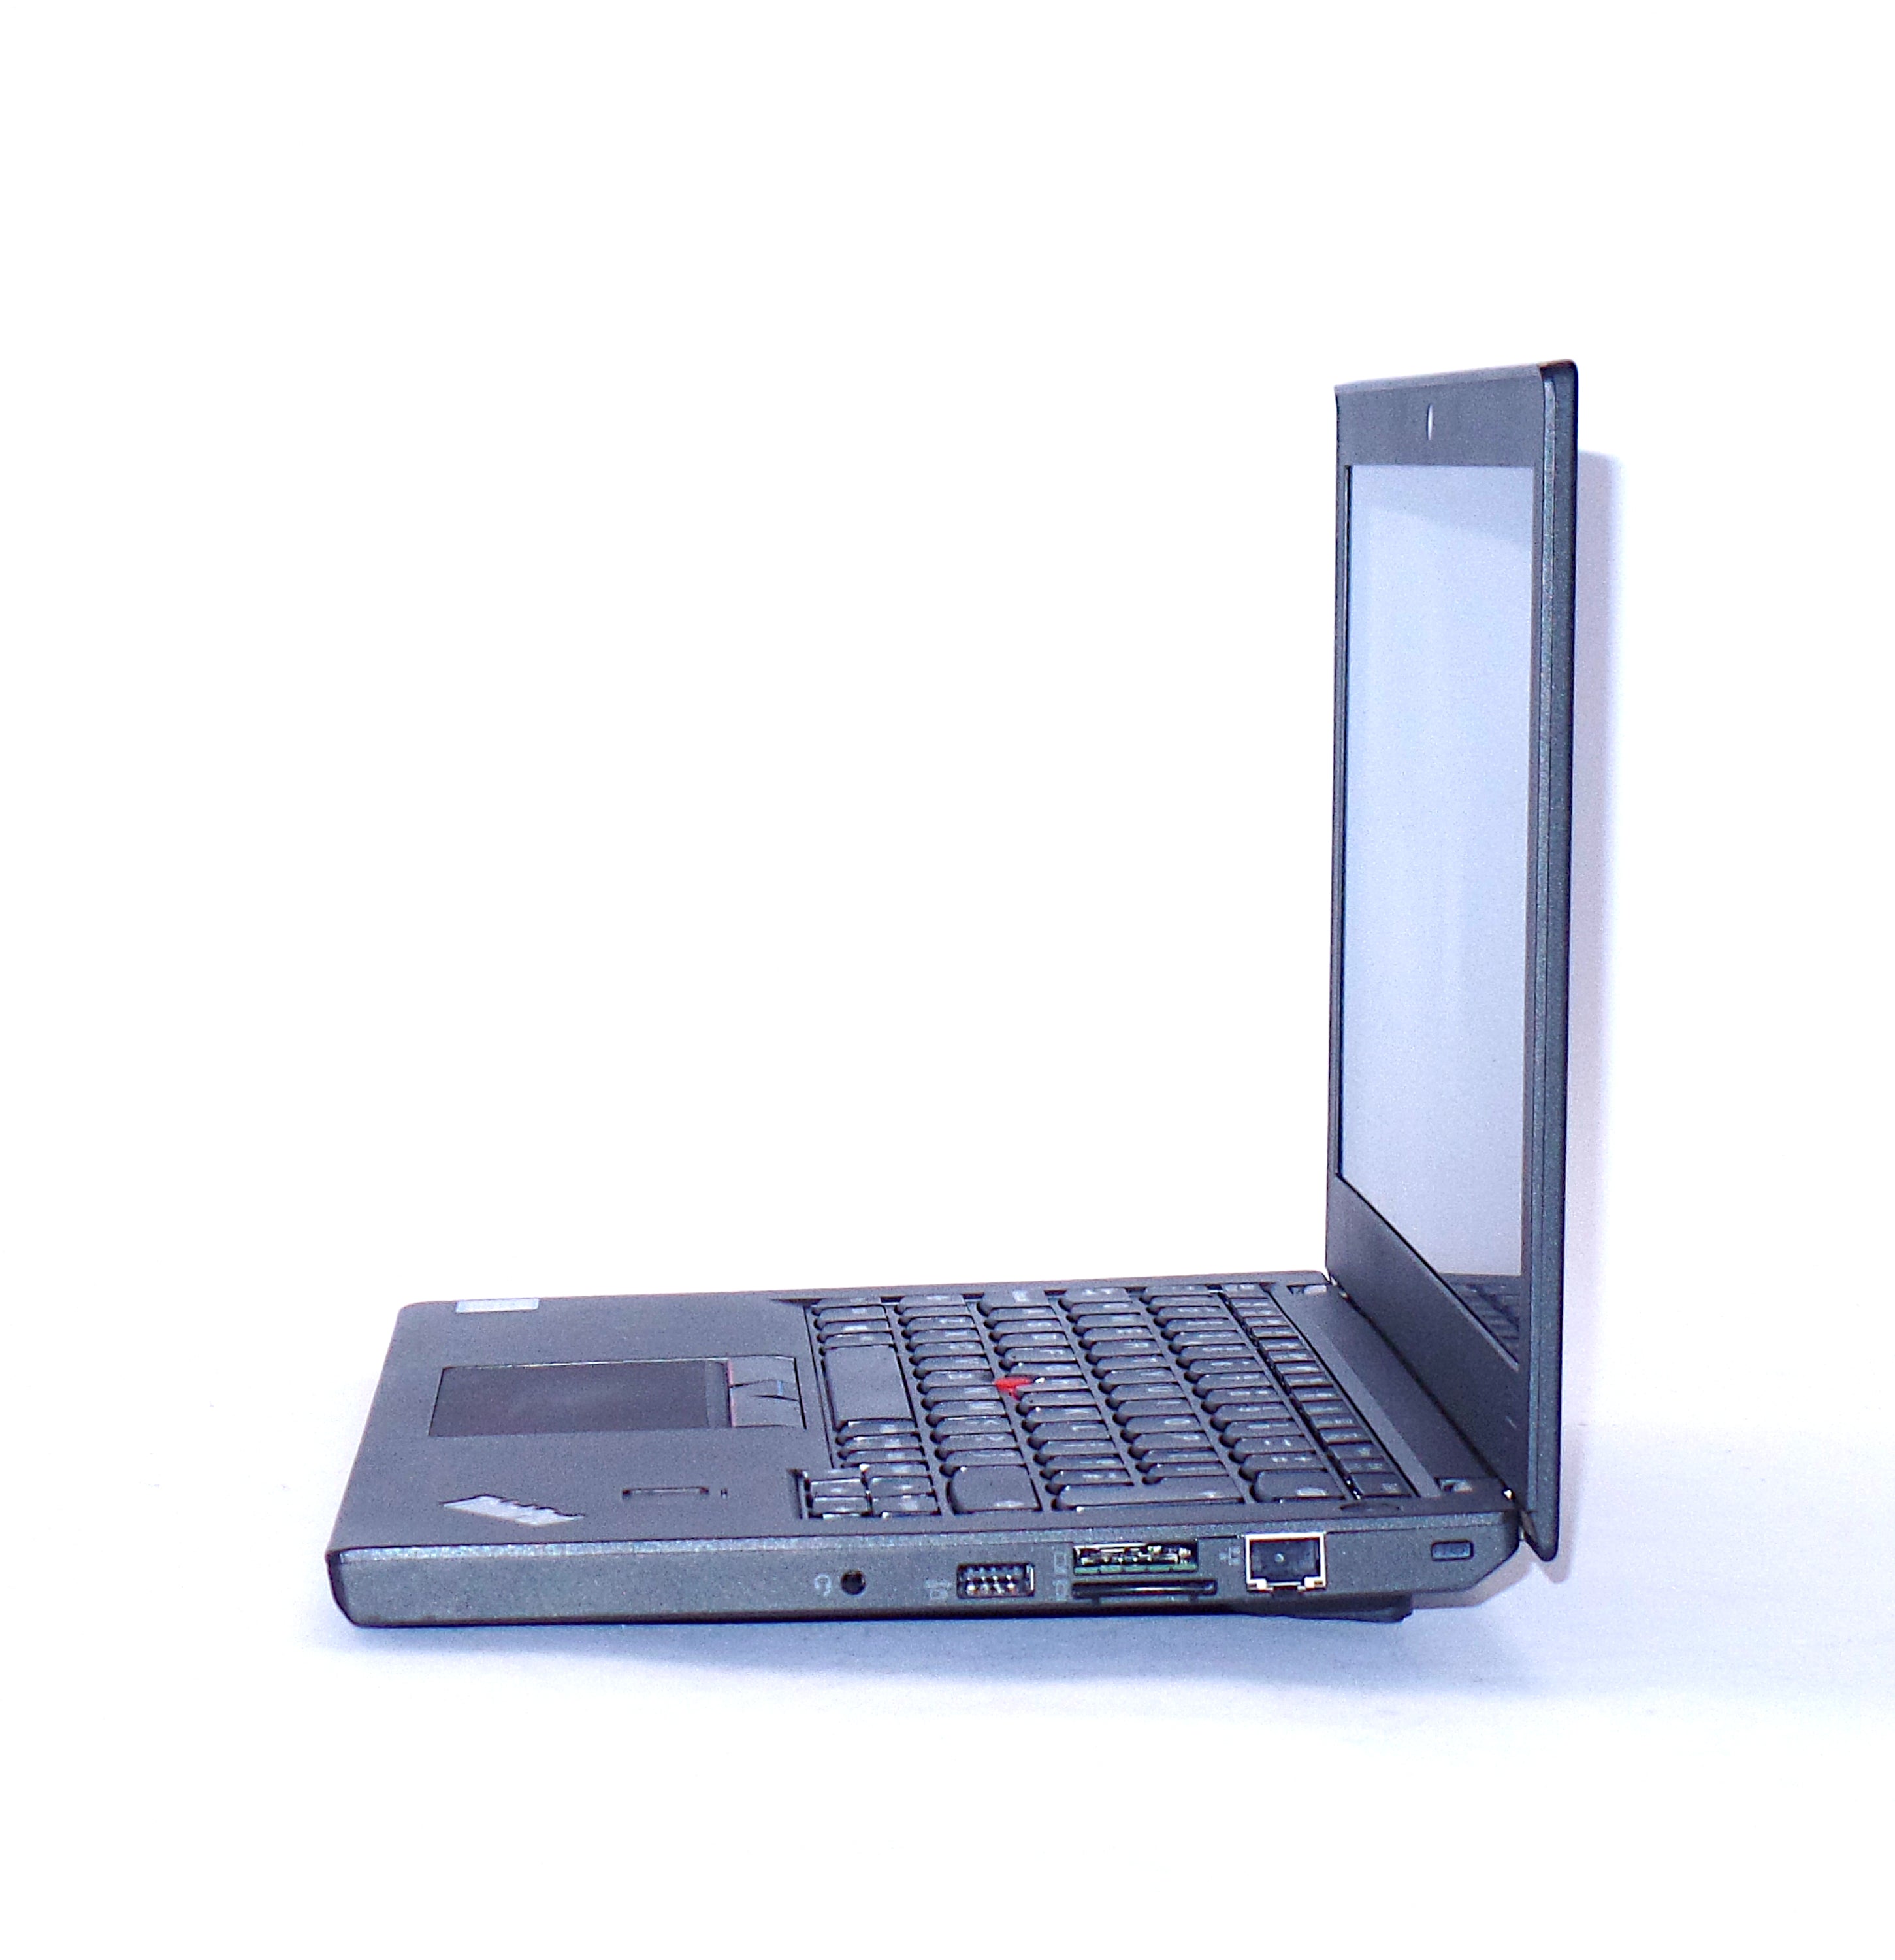 Lenovo Thinkpad X270 Laptop, 12.5" Intel Core i5, 8GB RAM, 256GB SSD